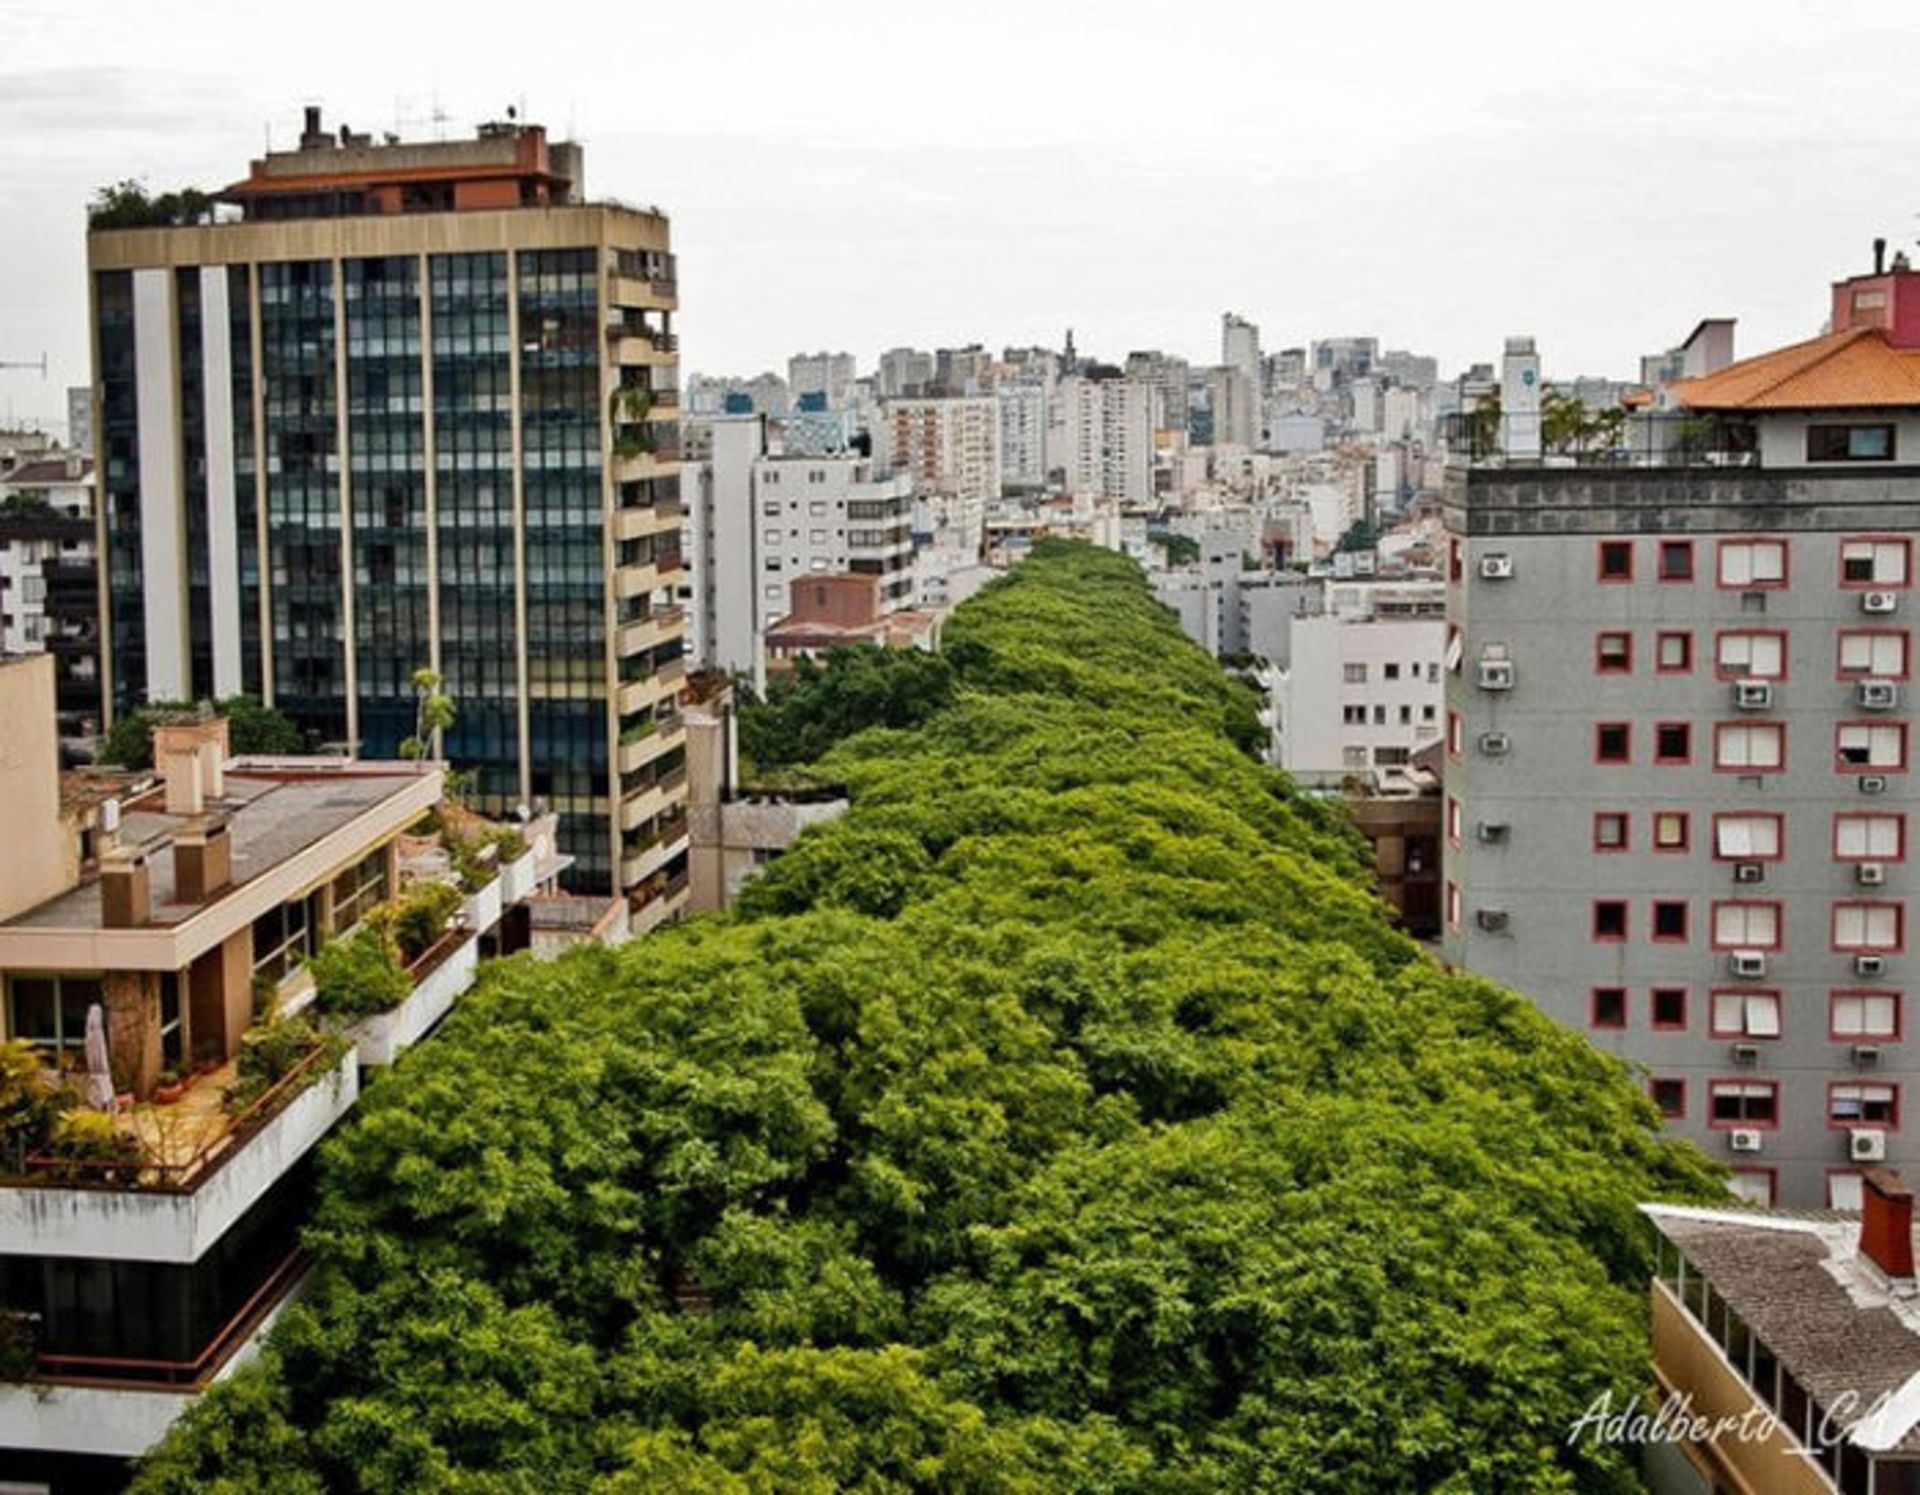 Top-10-Streets-Brazil-Photo-by-Adalberto-Cavalcanti-Adreani-740x576